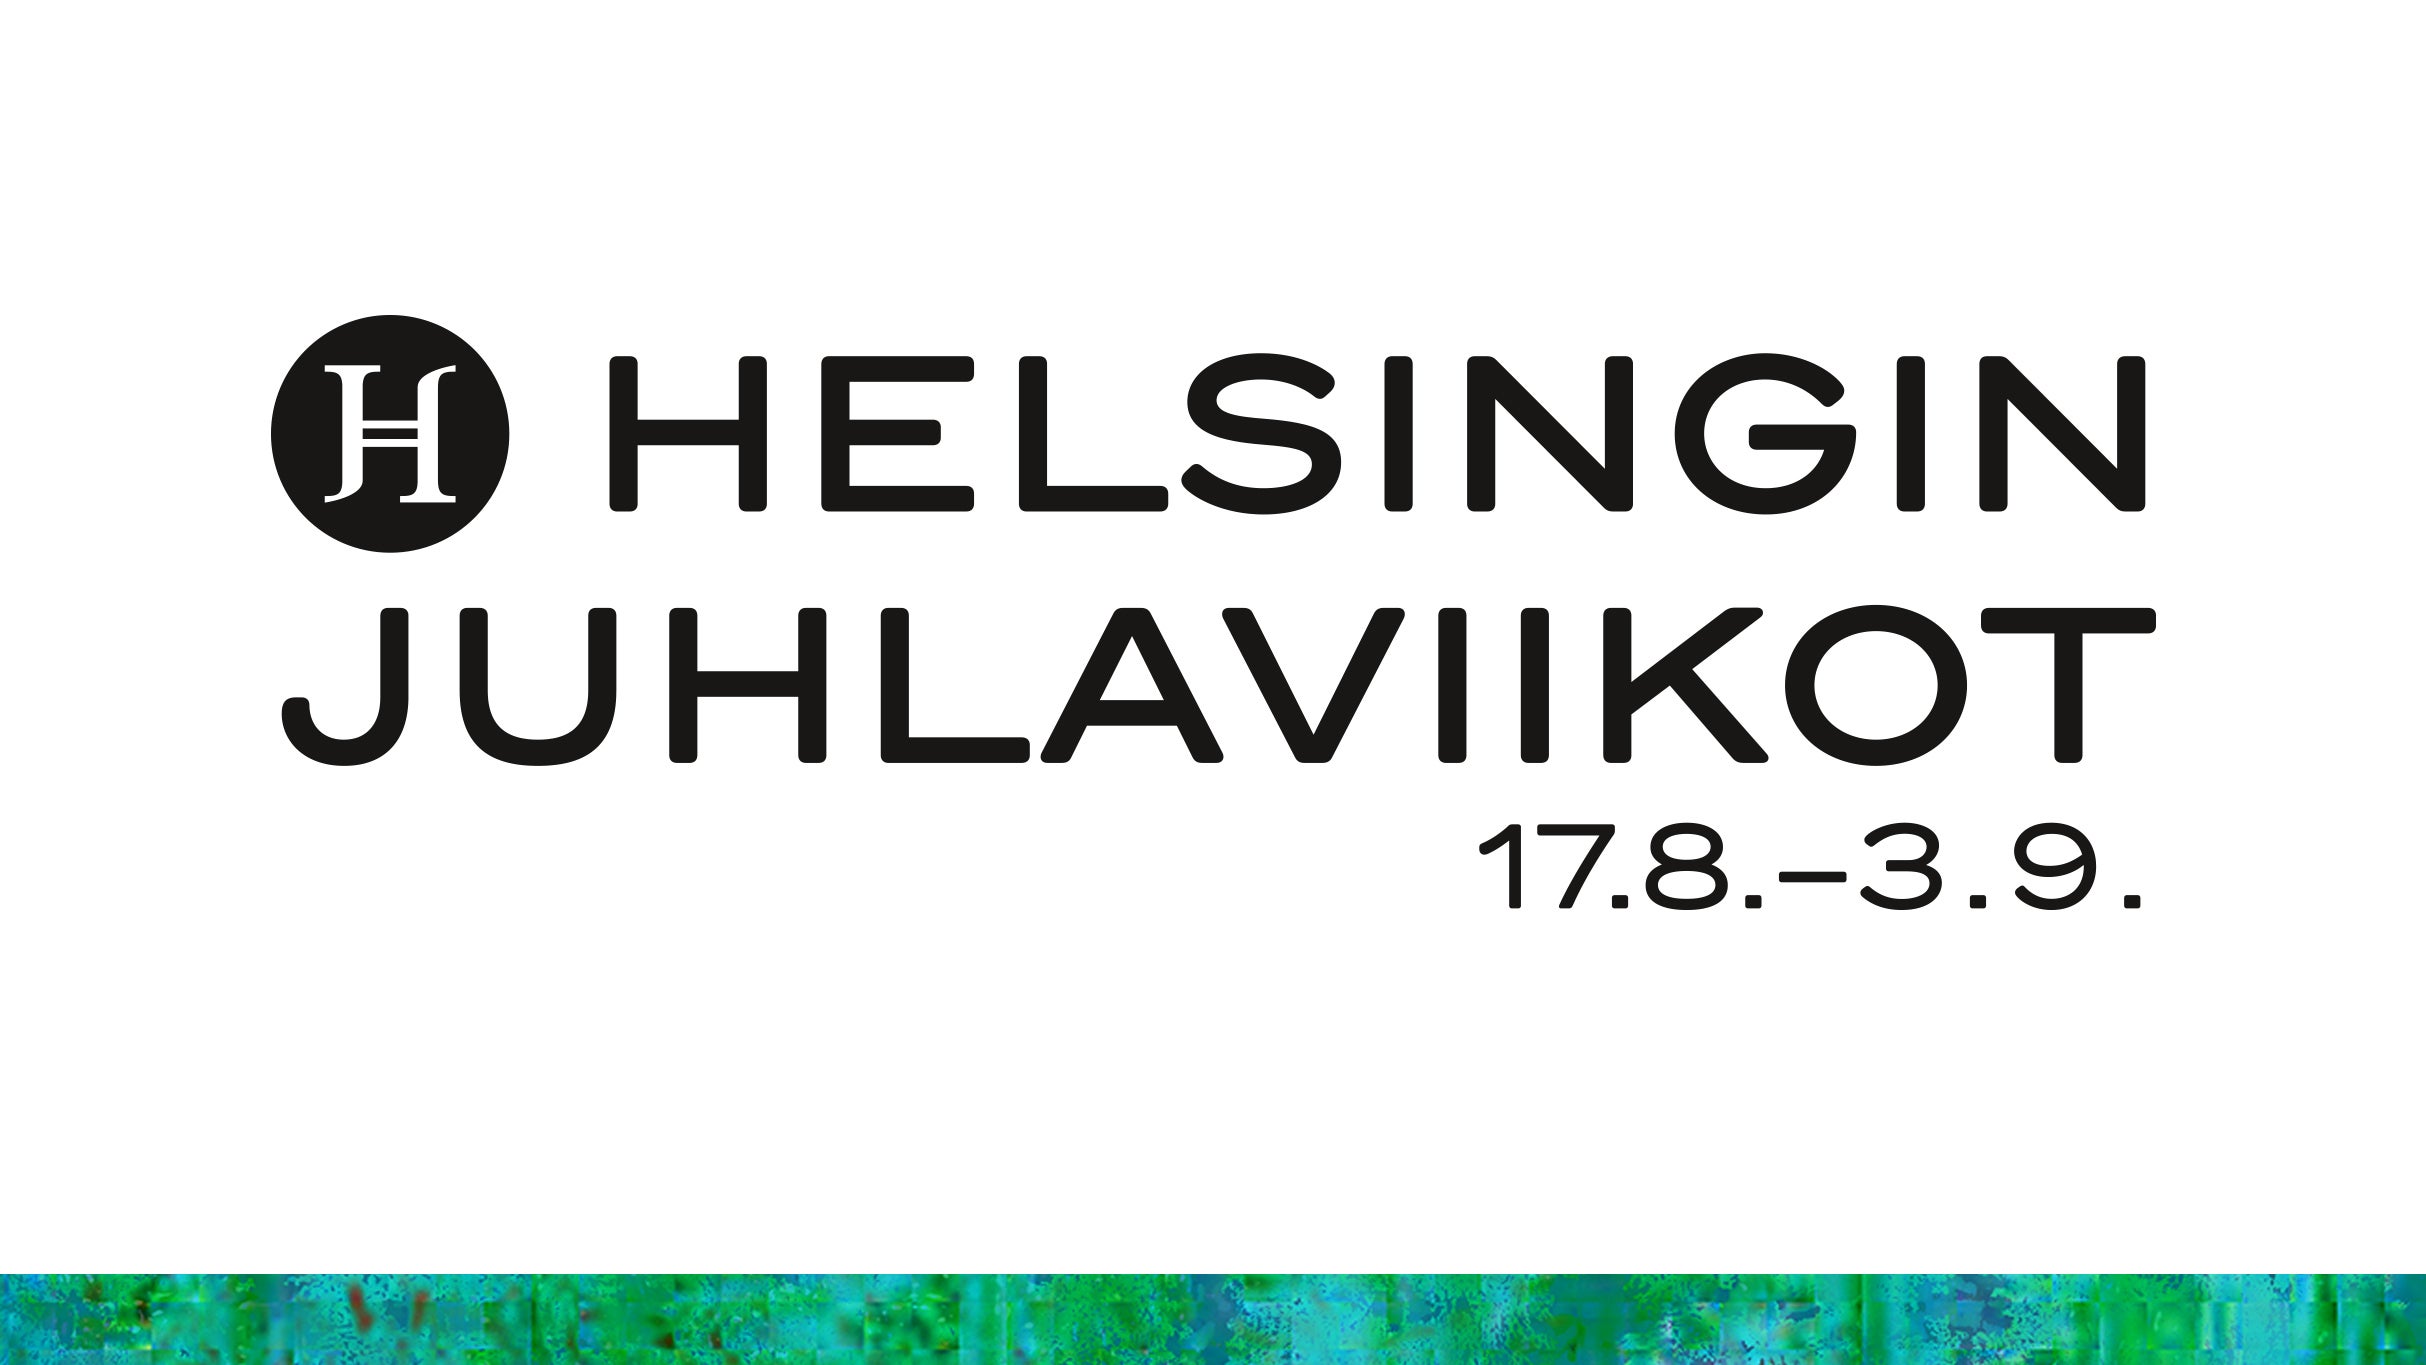 Helsingin Juhlaviikot presale information on freepresalepasswords.com